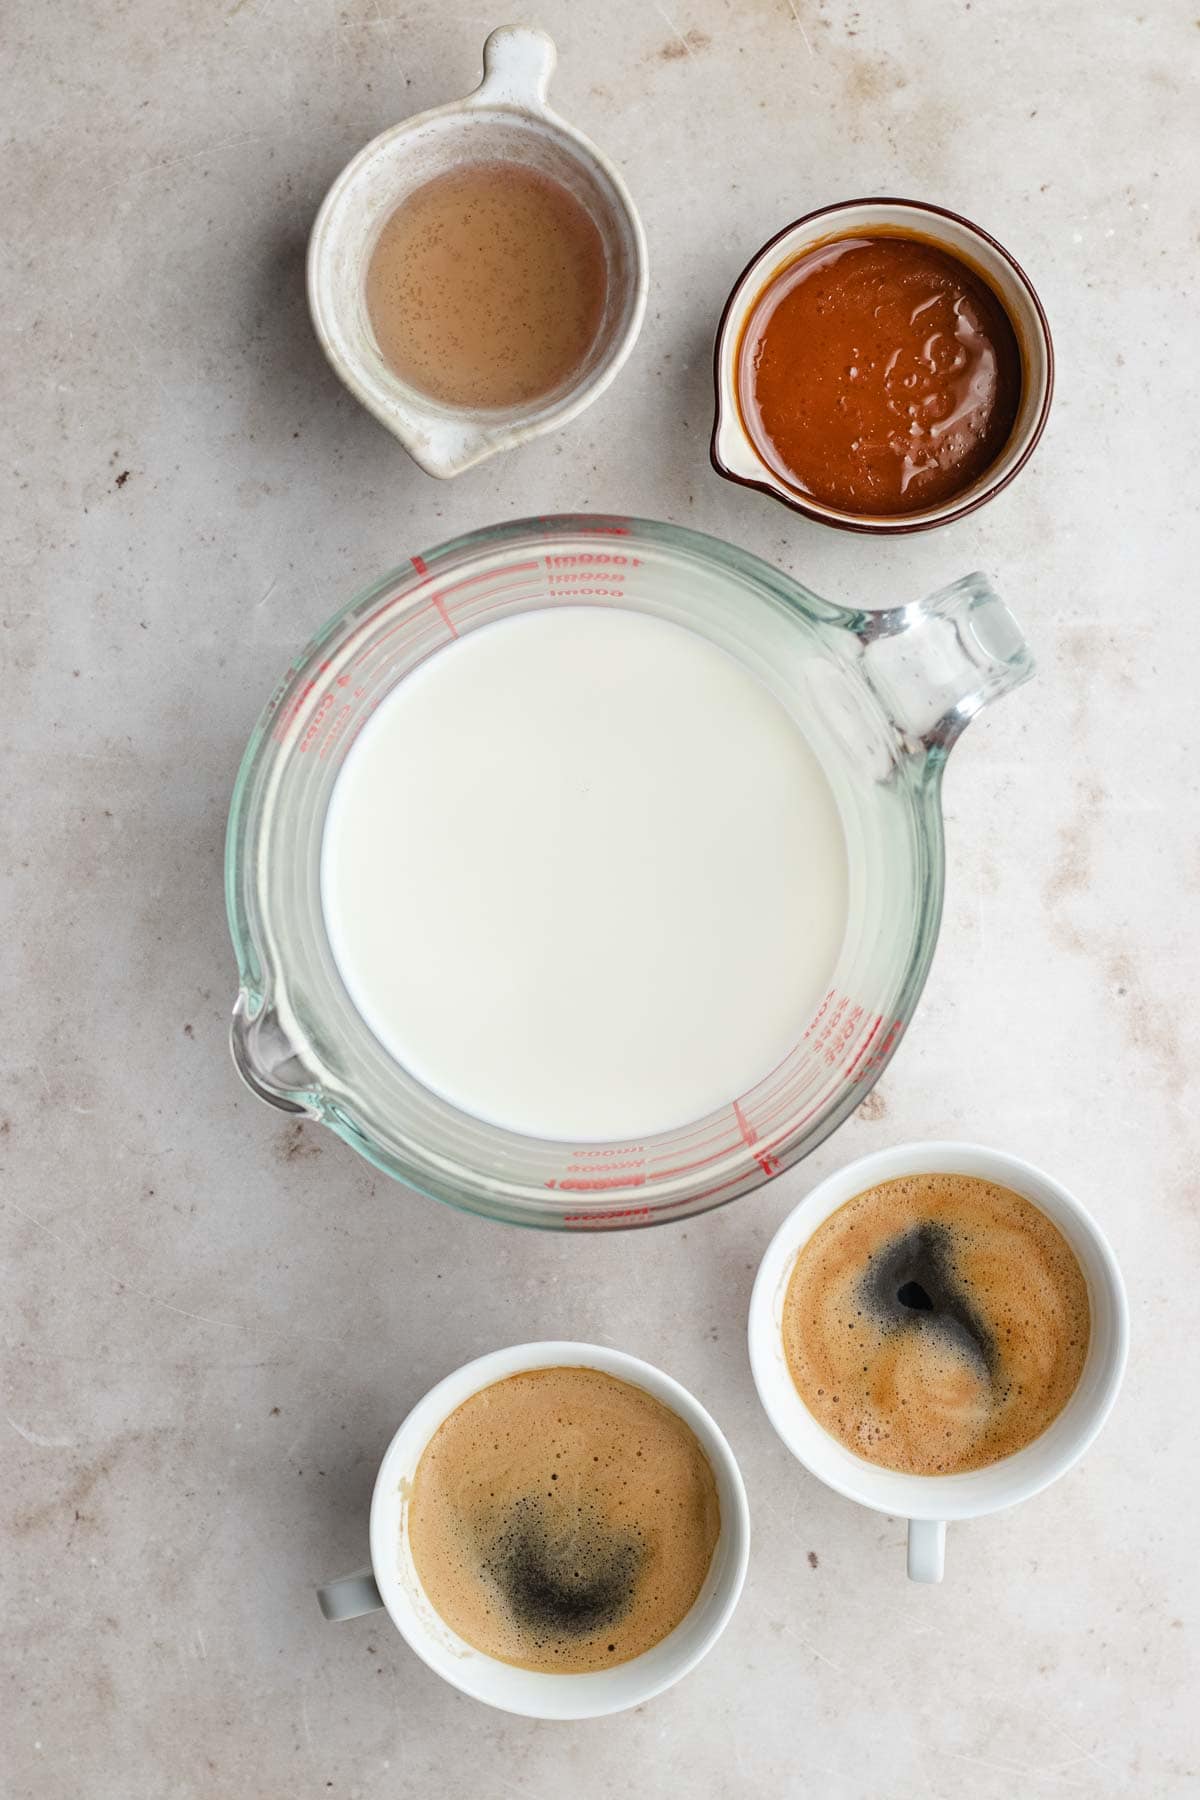 Caramel Macchiato ingredients and espresso in separate cups